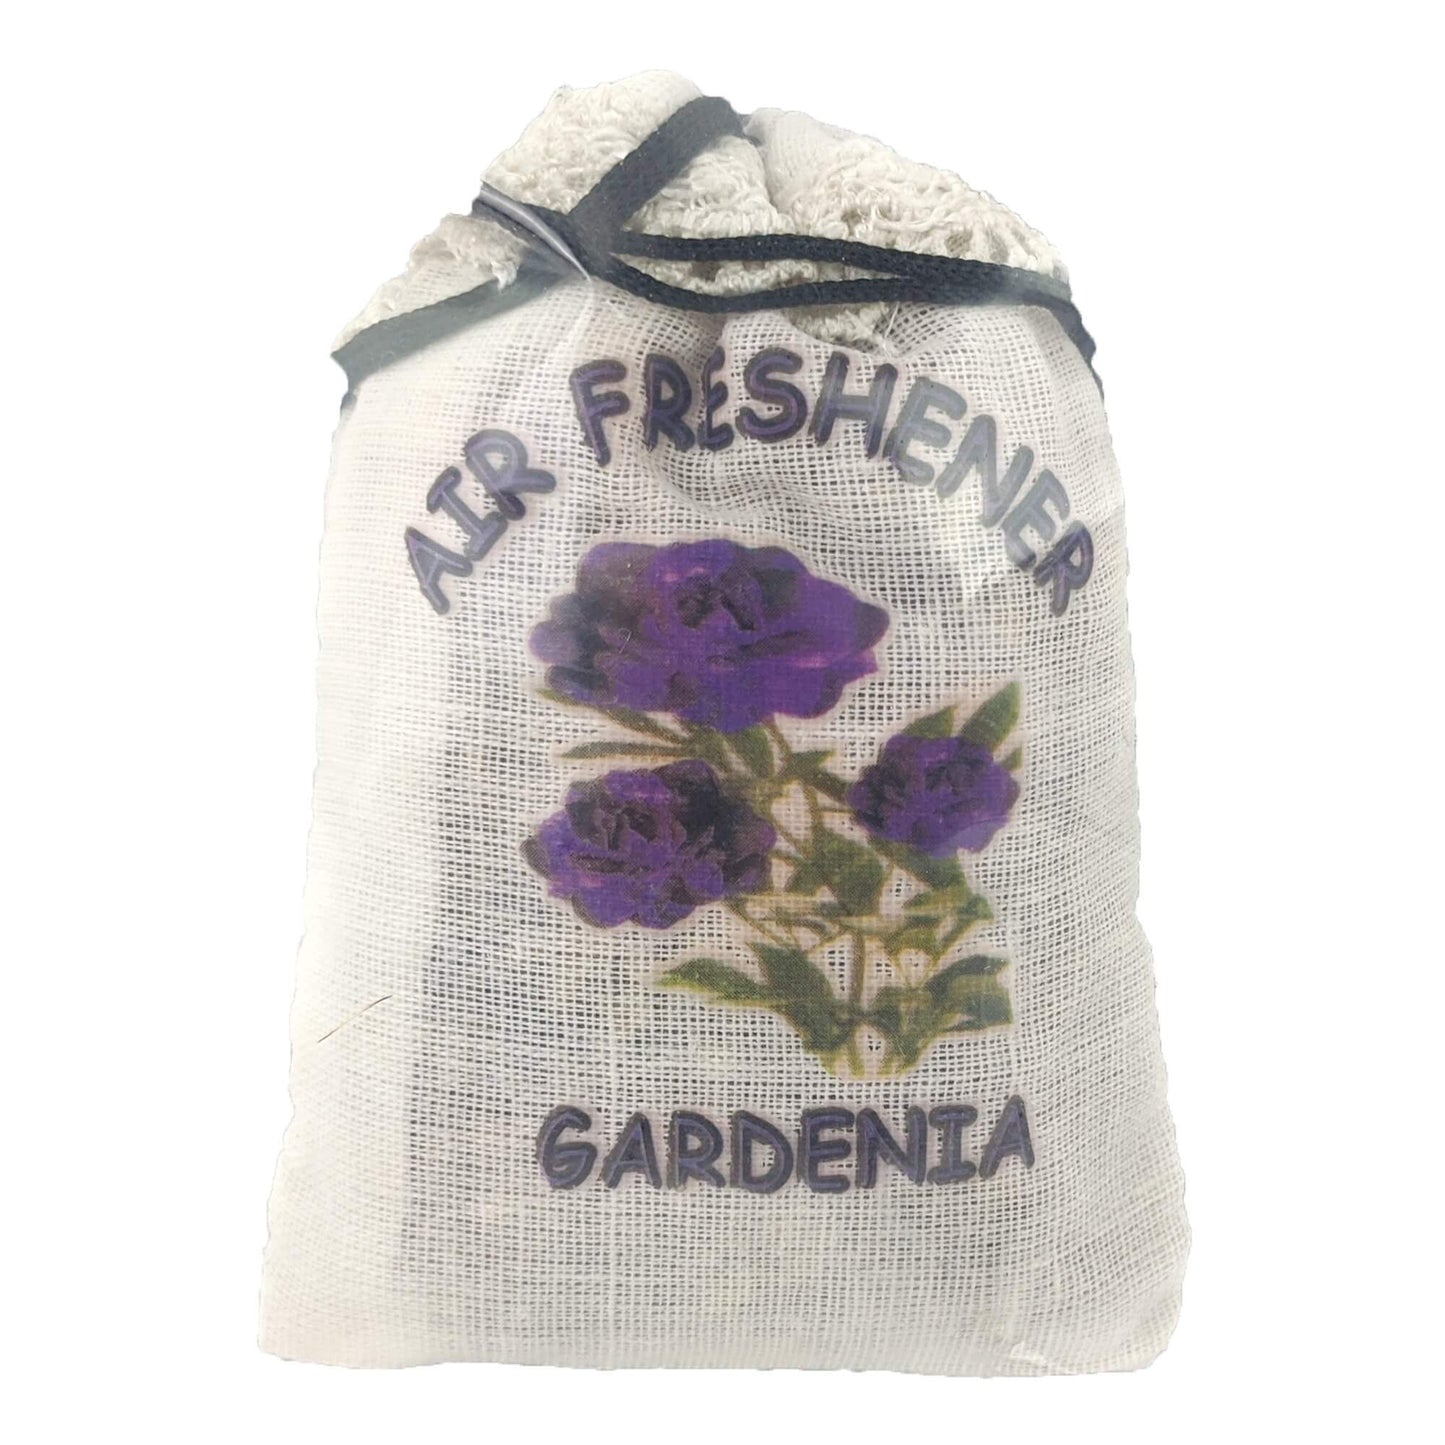 Gardenia Scent Blunteffects Cloth Bag Air Freshener